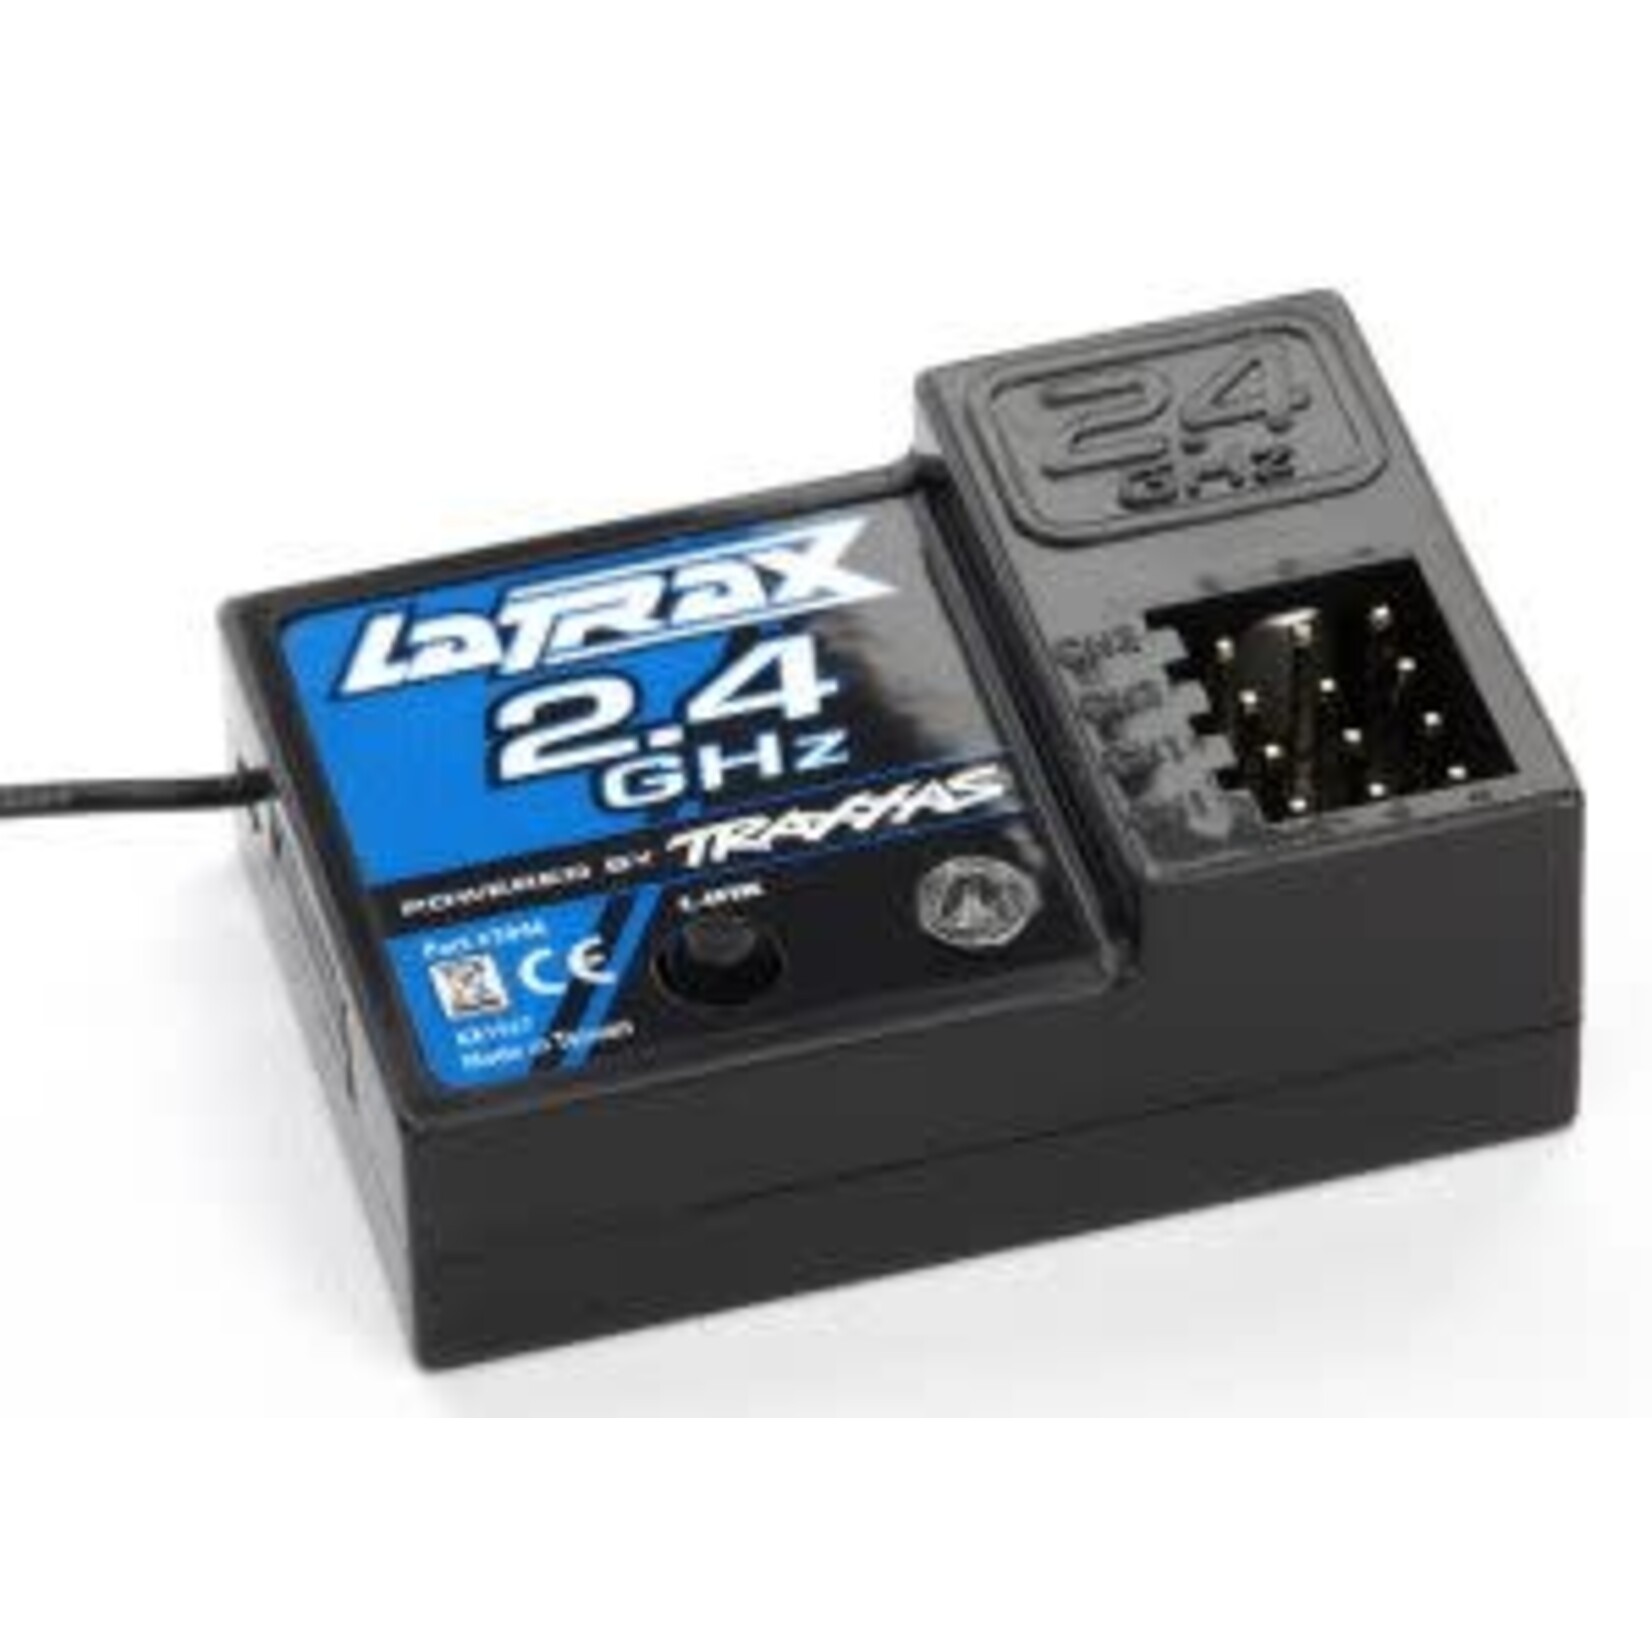 Traxxas 3046 Receiver, LaTrax® micro, 2.4GHz (3-channel)